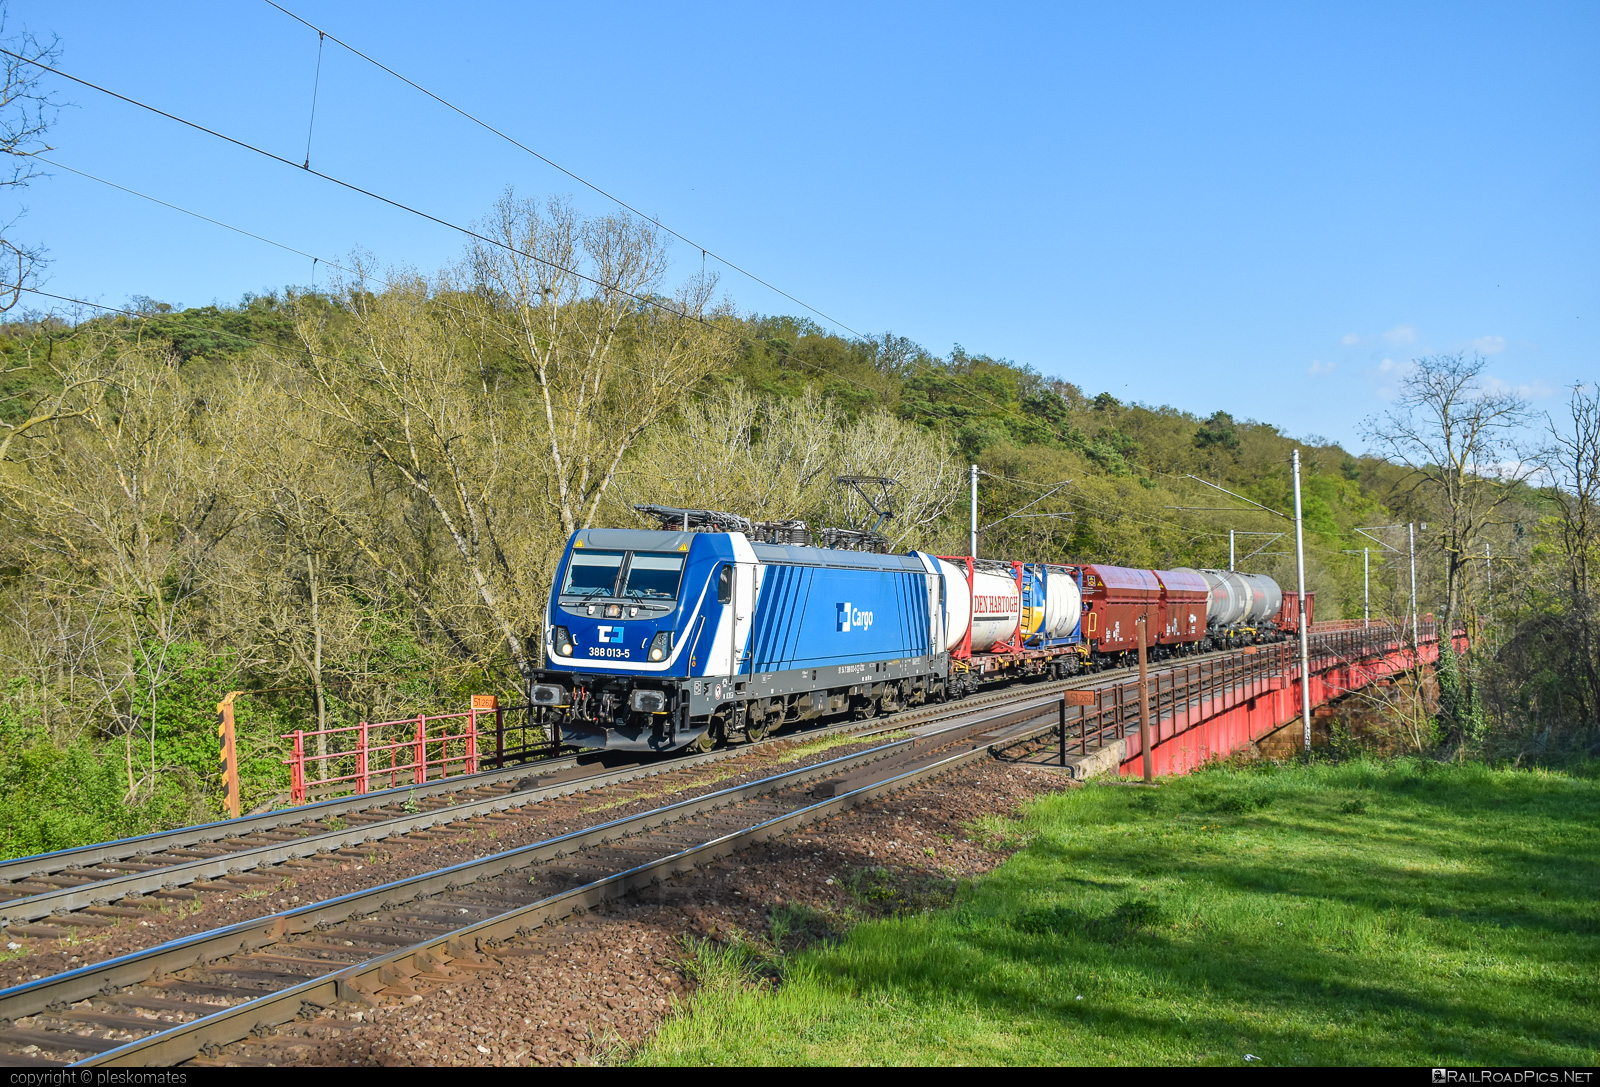 Alstom TRAXX MS3 - 388 013-5 operated by ČD Cargo, a.s. #alstom #alstomTraxx #cdcargo #mixofcargo #traxx #traxxms3